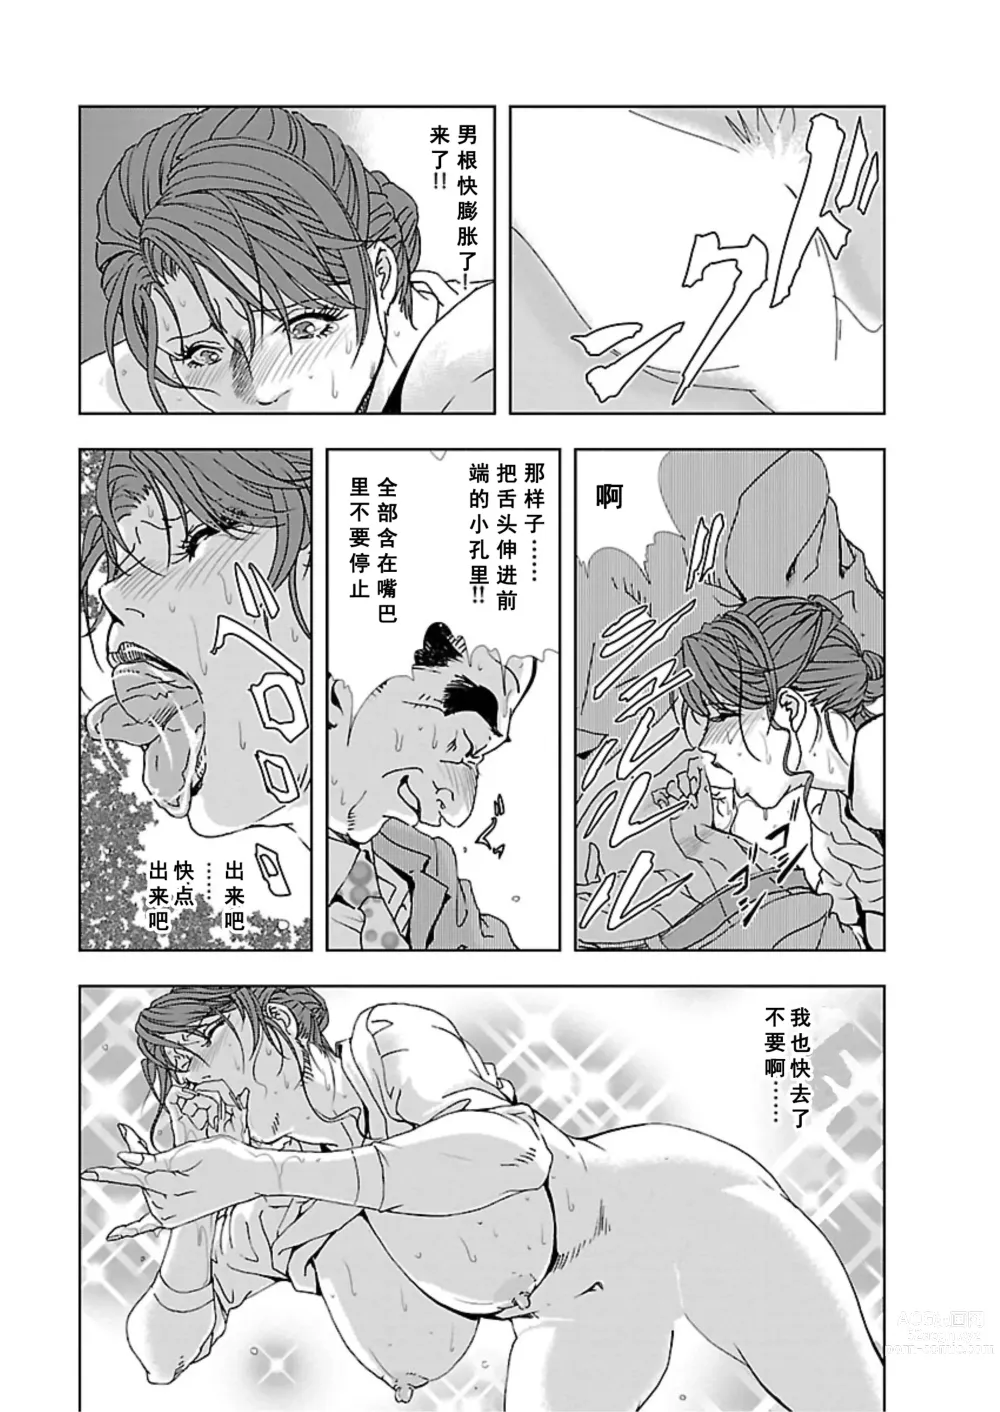 Page 136 of manga Nikuhisyo Yukiko Vol.01